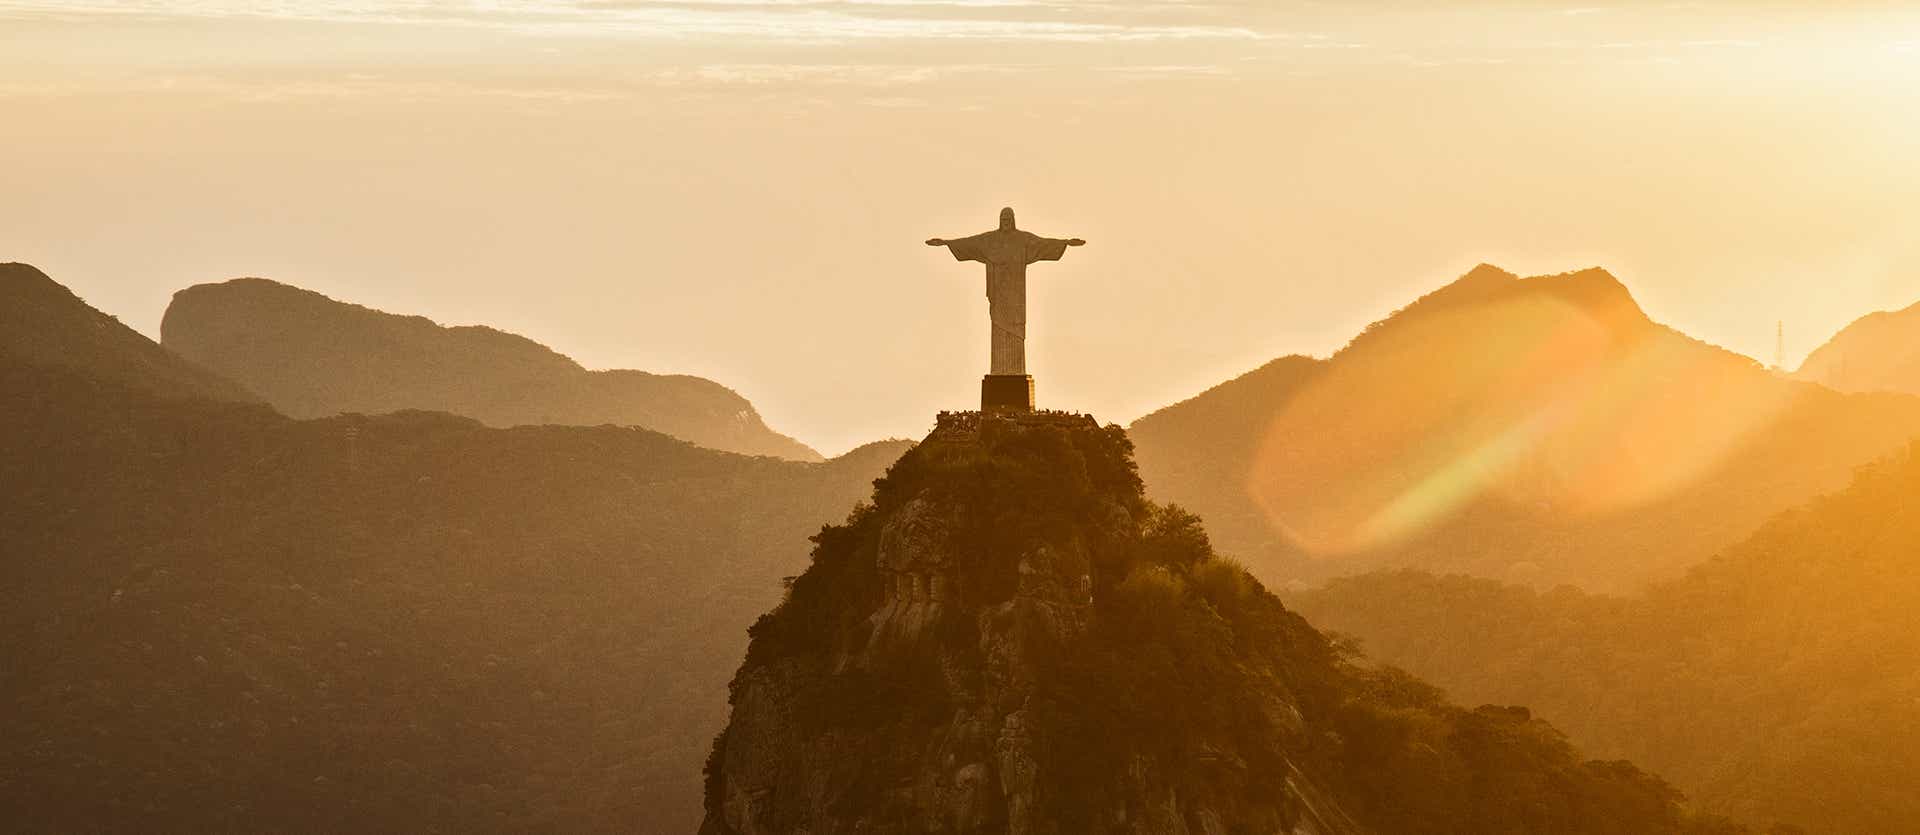 Christ of the Redeemer <span class="iconos separador"></span> Rio de Janeiro <span class="iconos separador"></span> Brazil